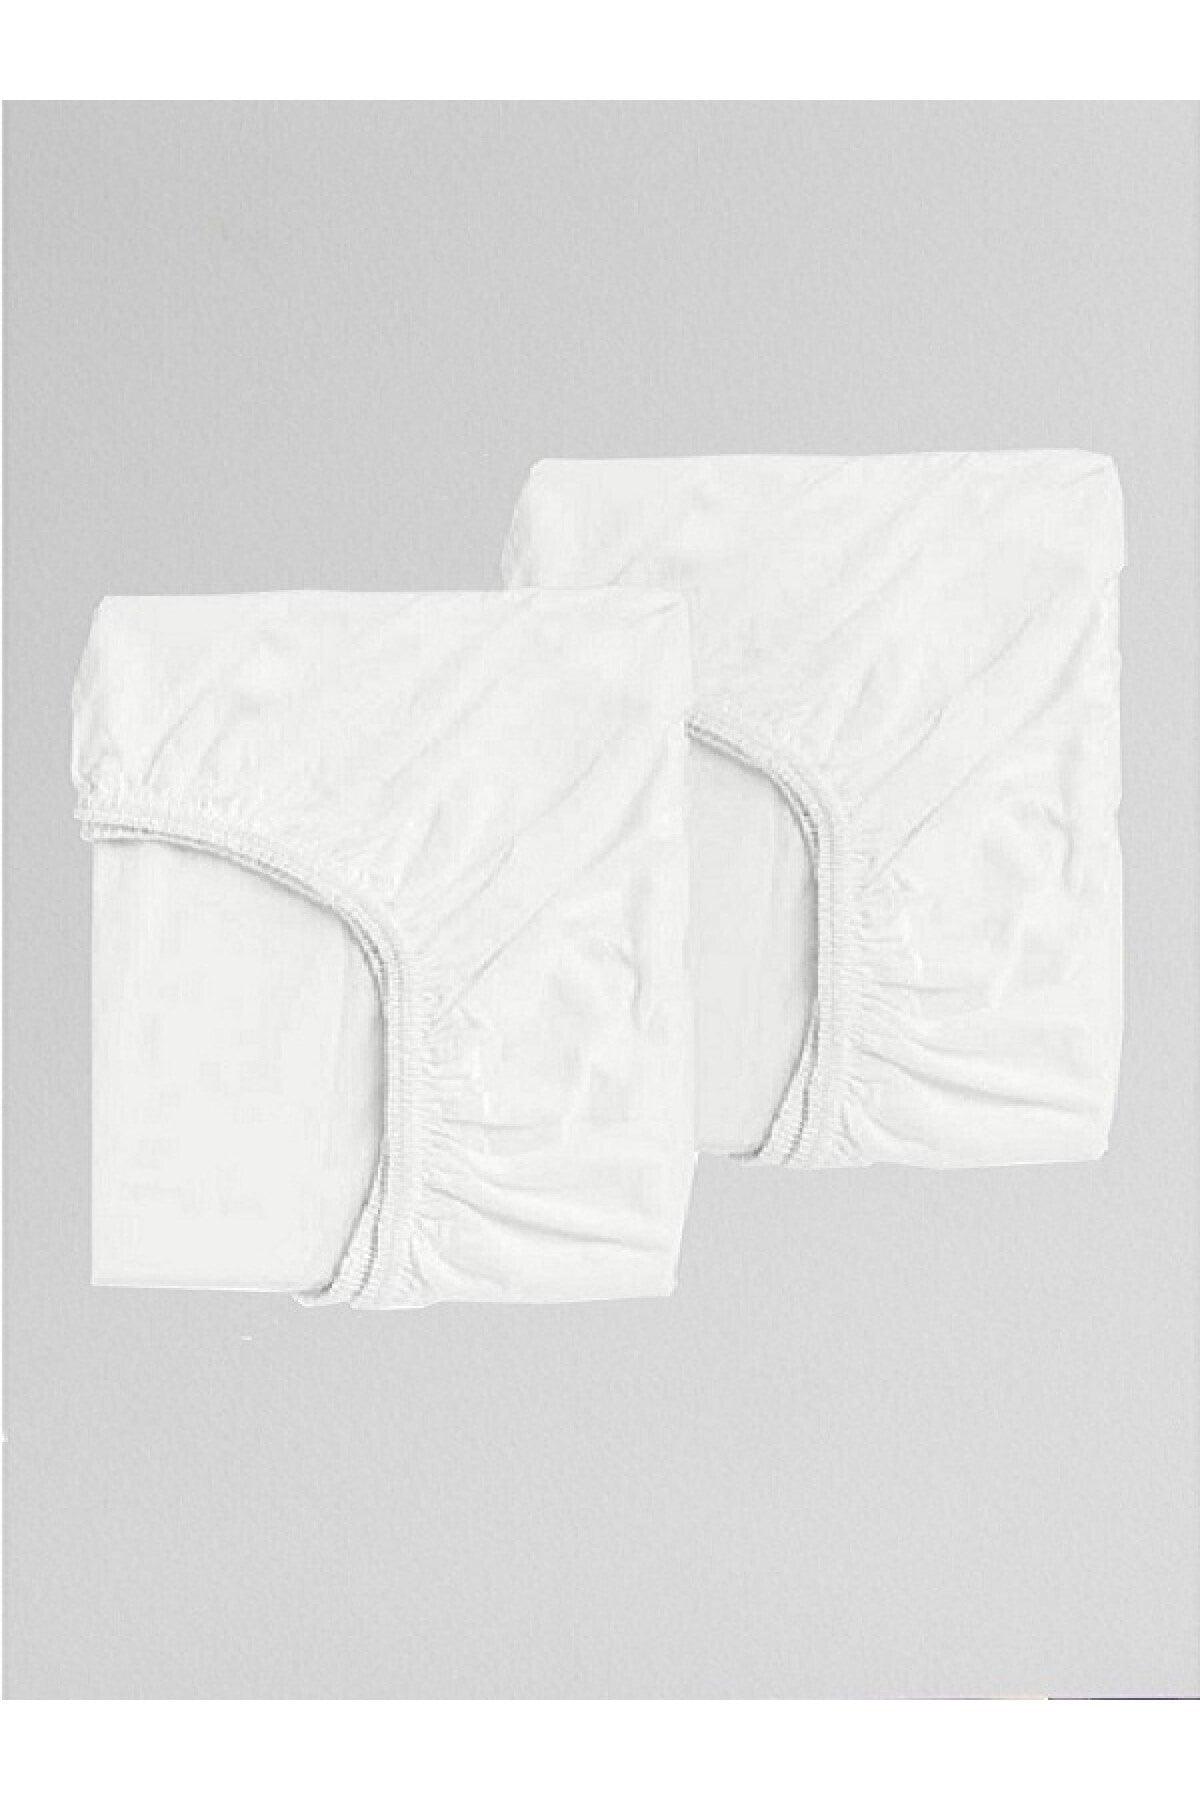 -White Baby Bed Sheet 70x140 - Swordslife